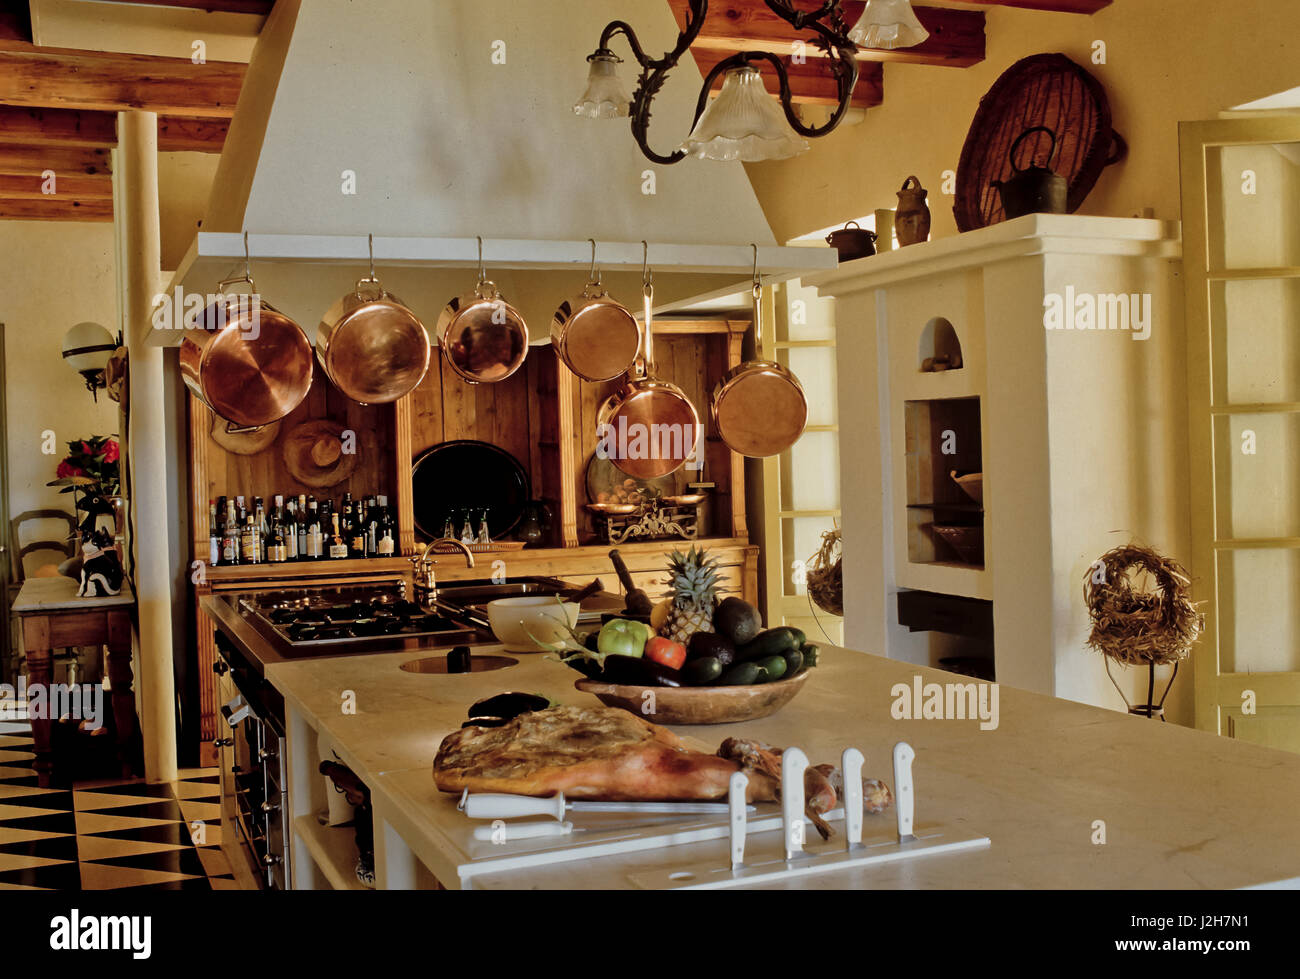 Contemporary rustic kitchen. Stock Photo